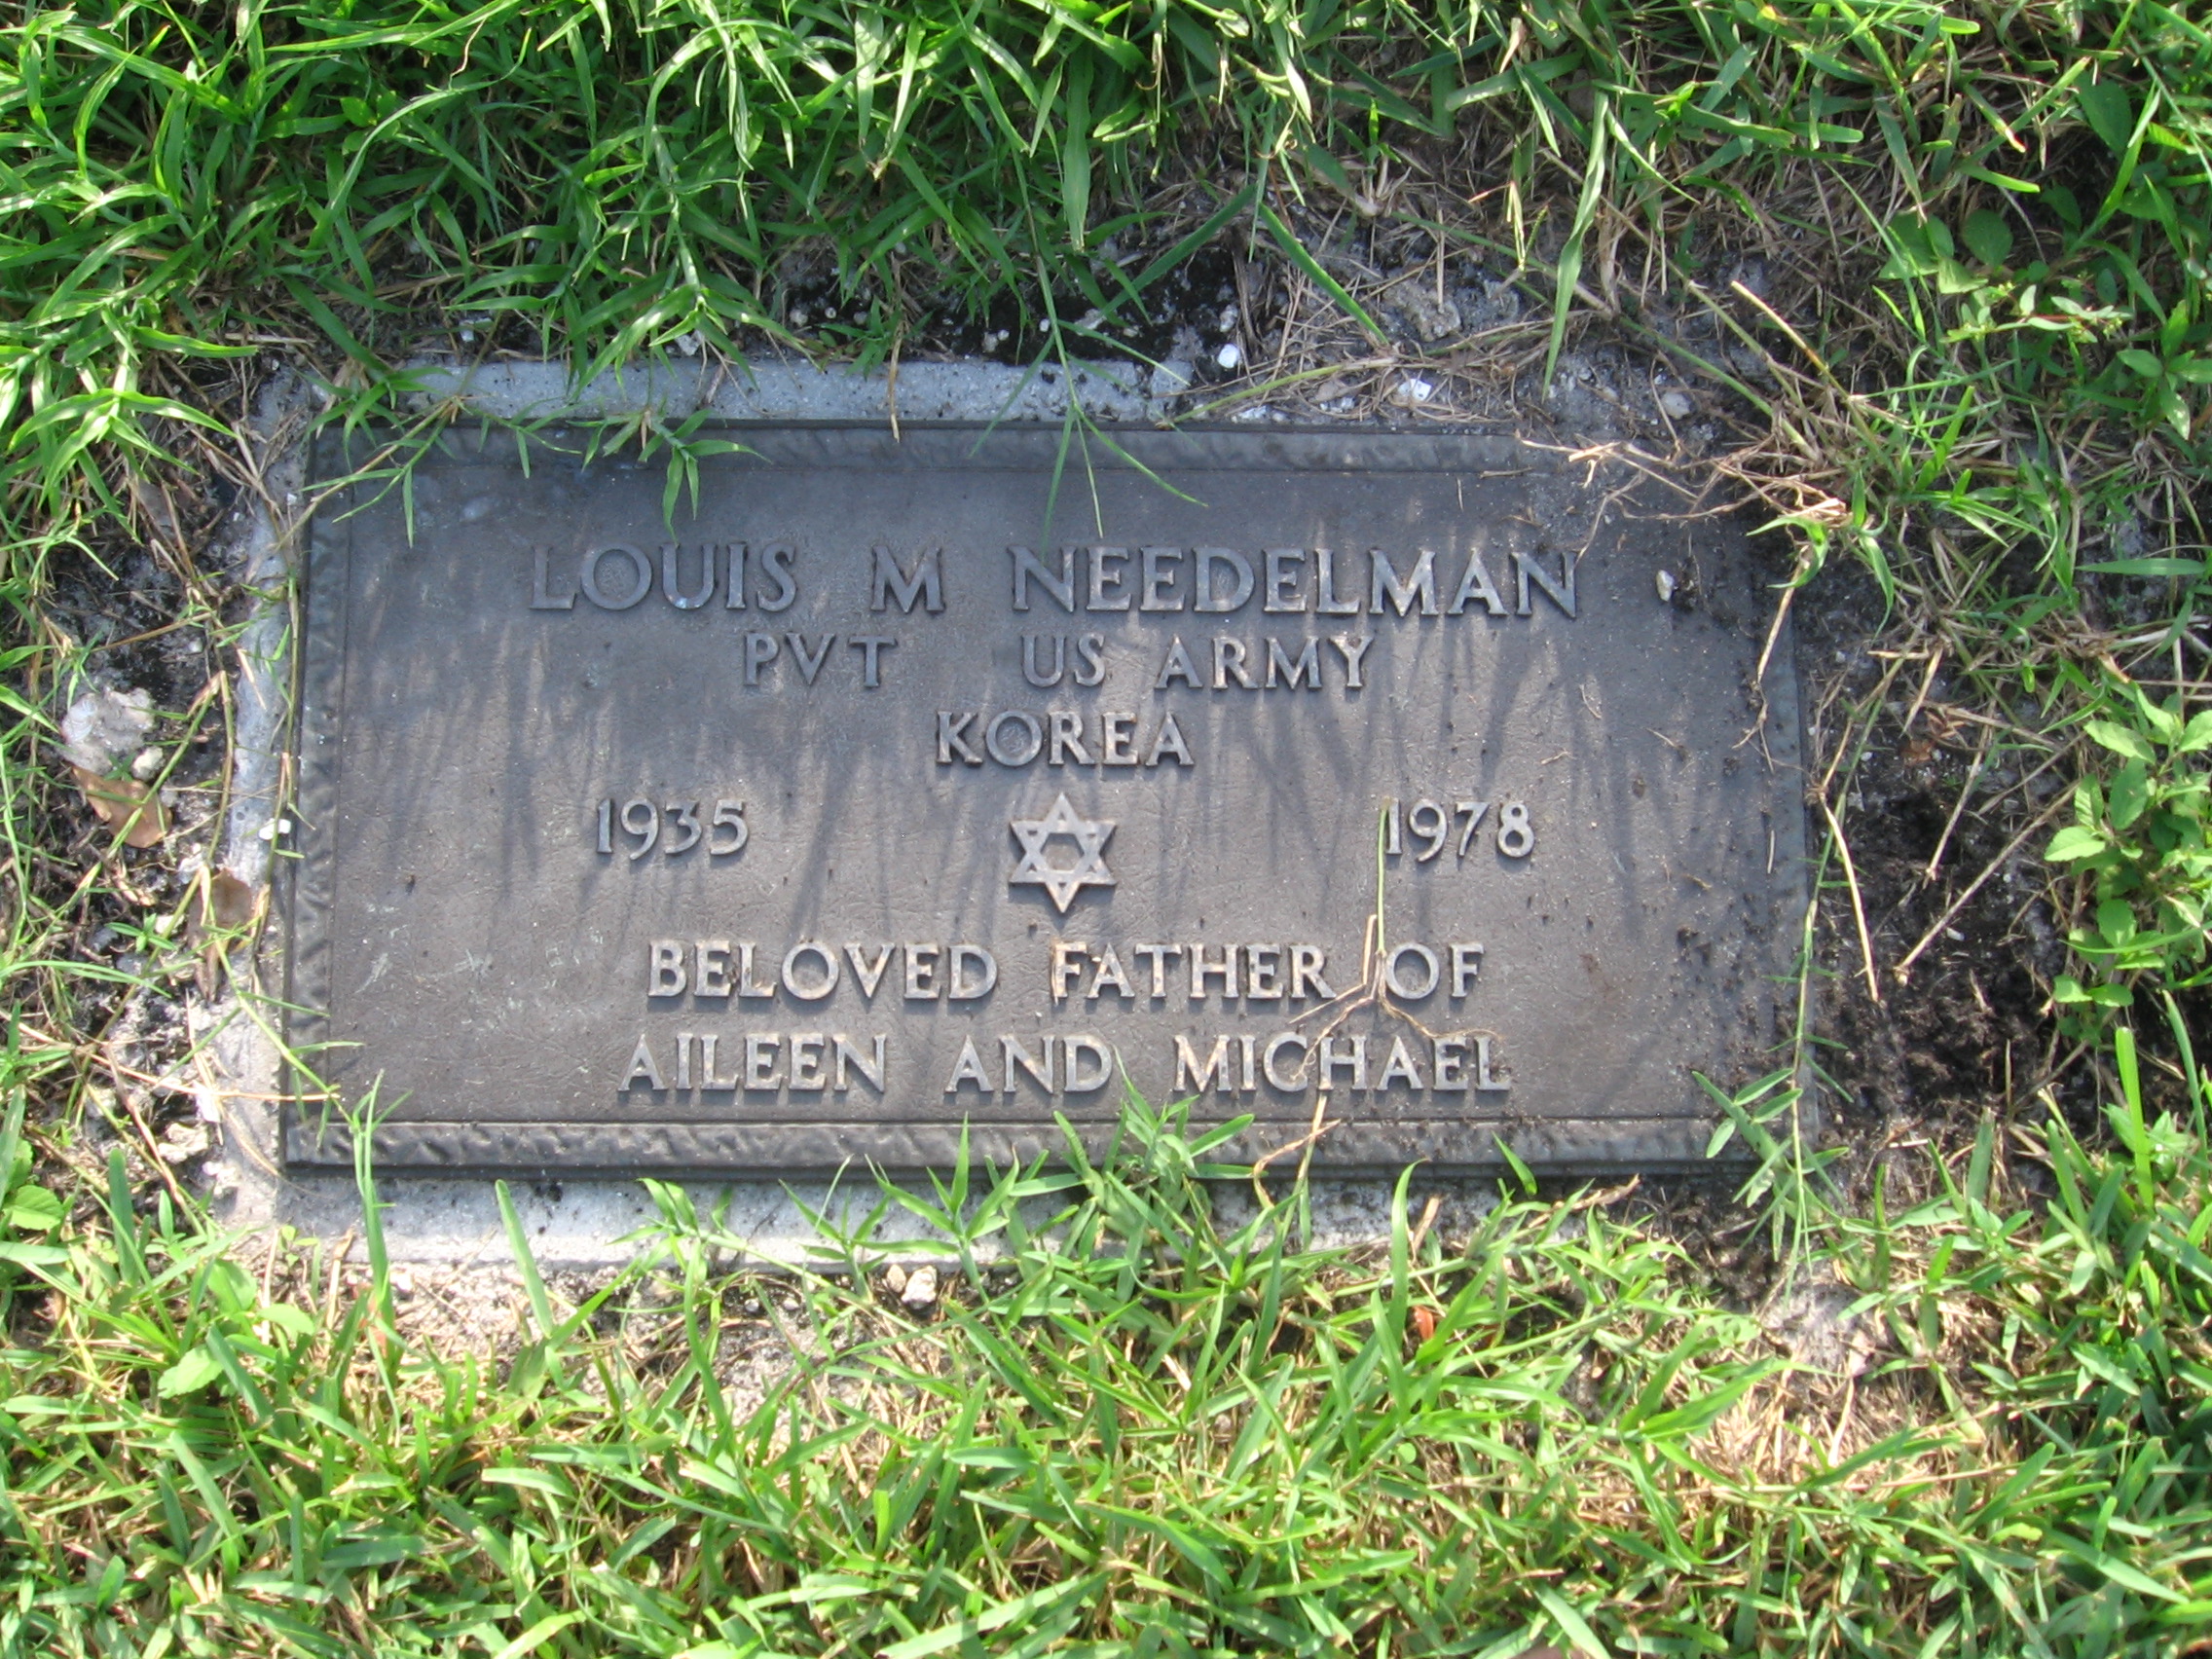 Pvt Louis M Needelman